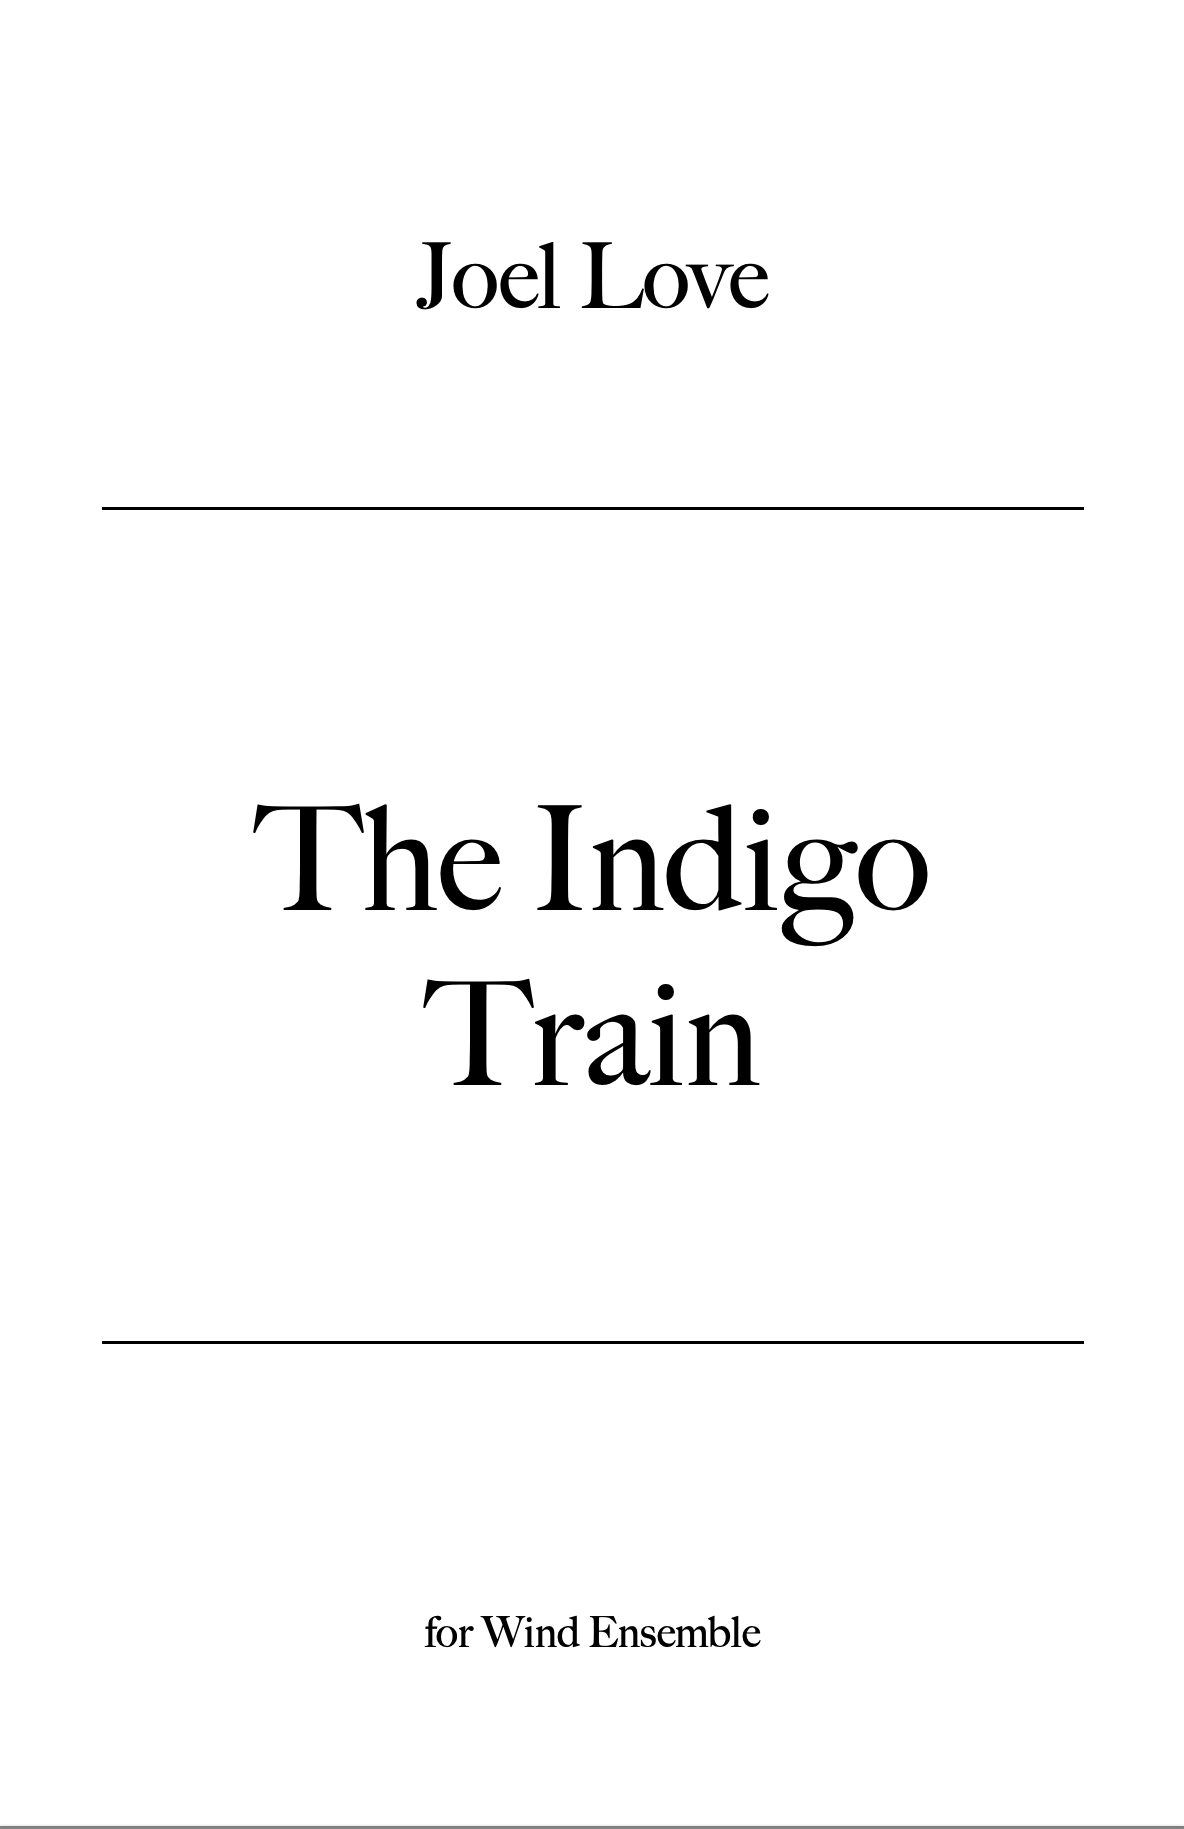 The Indigo Train (Score Only) by Joel Love